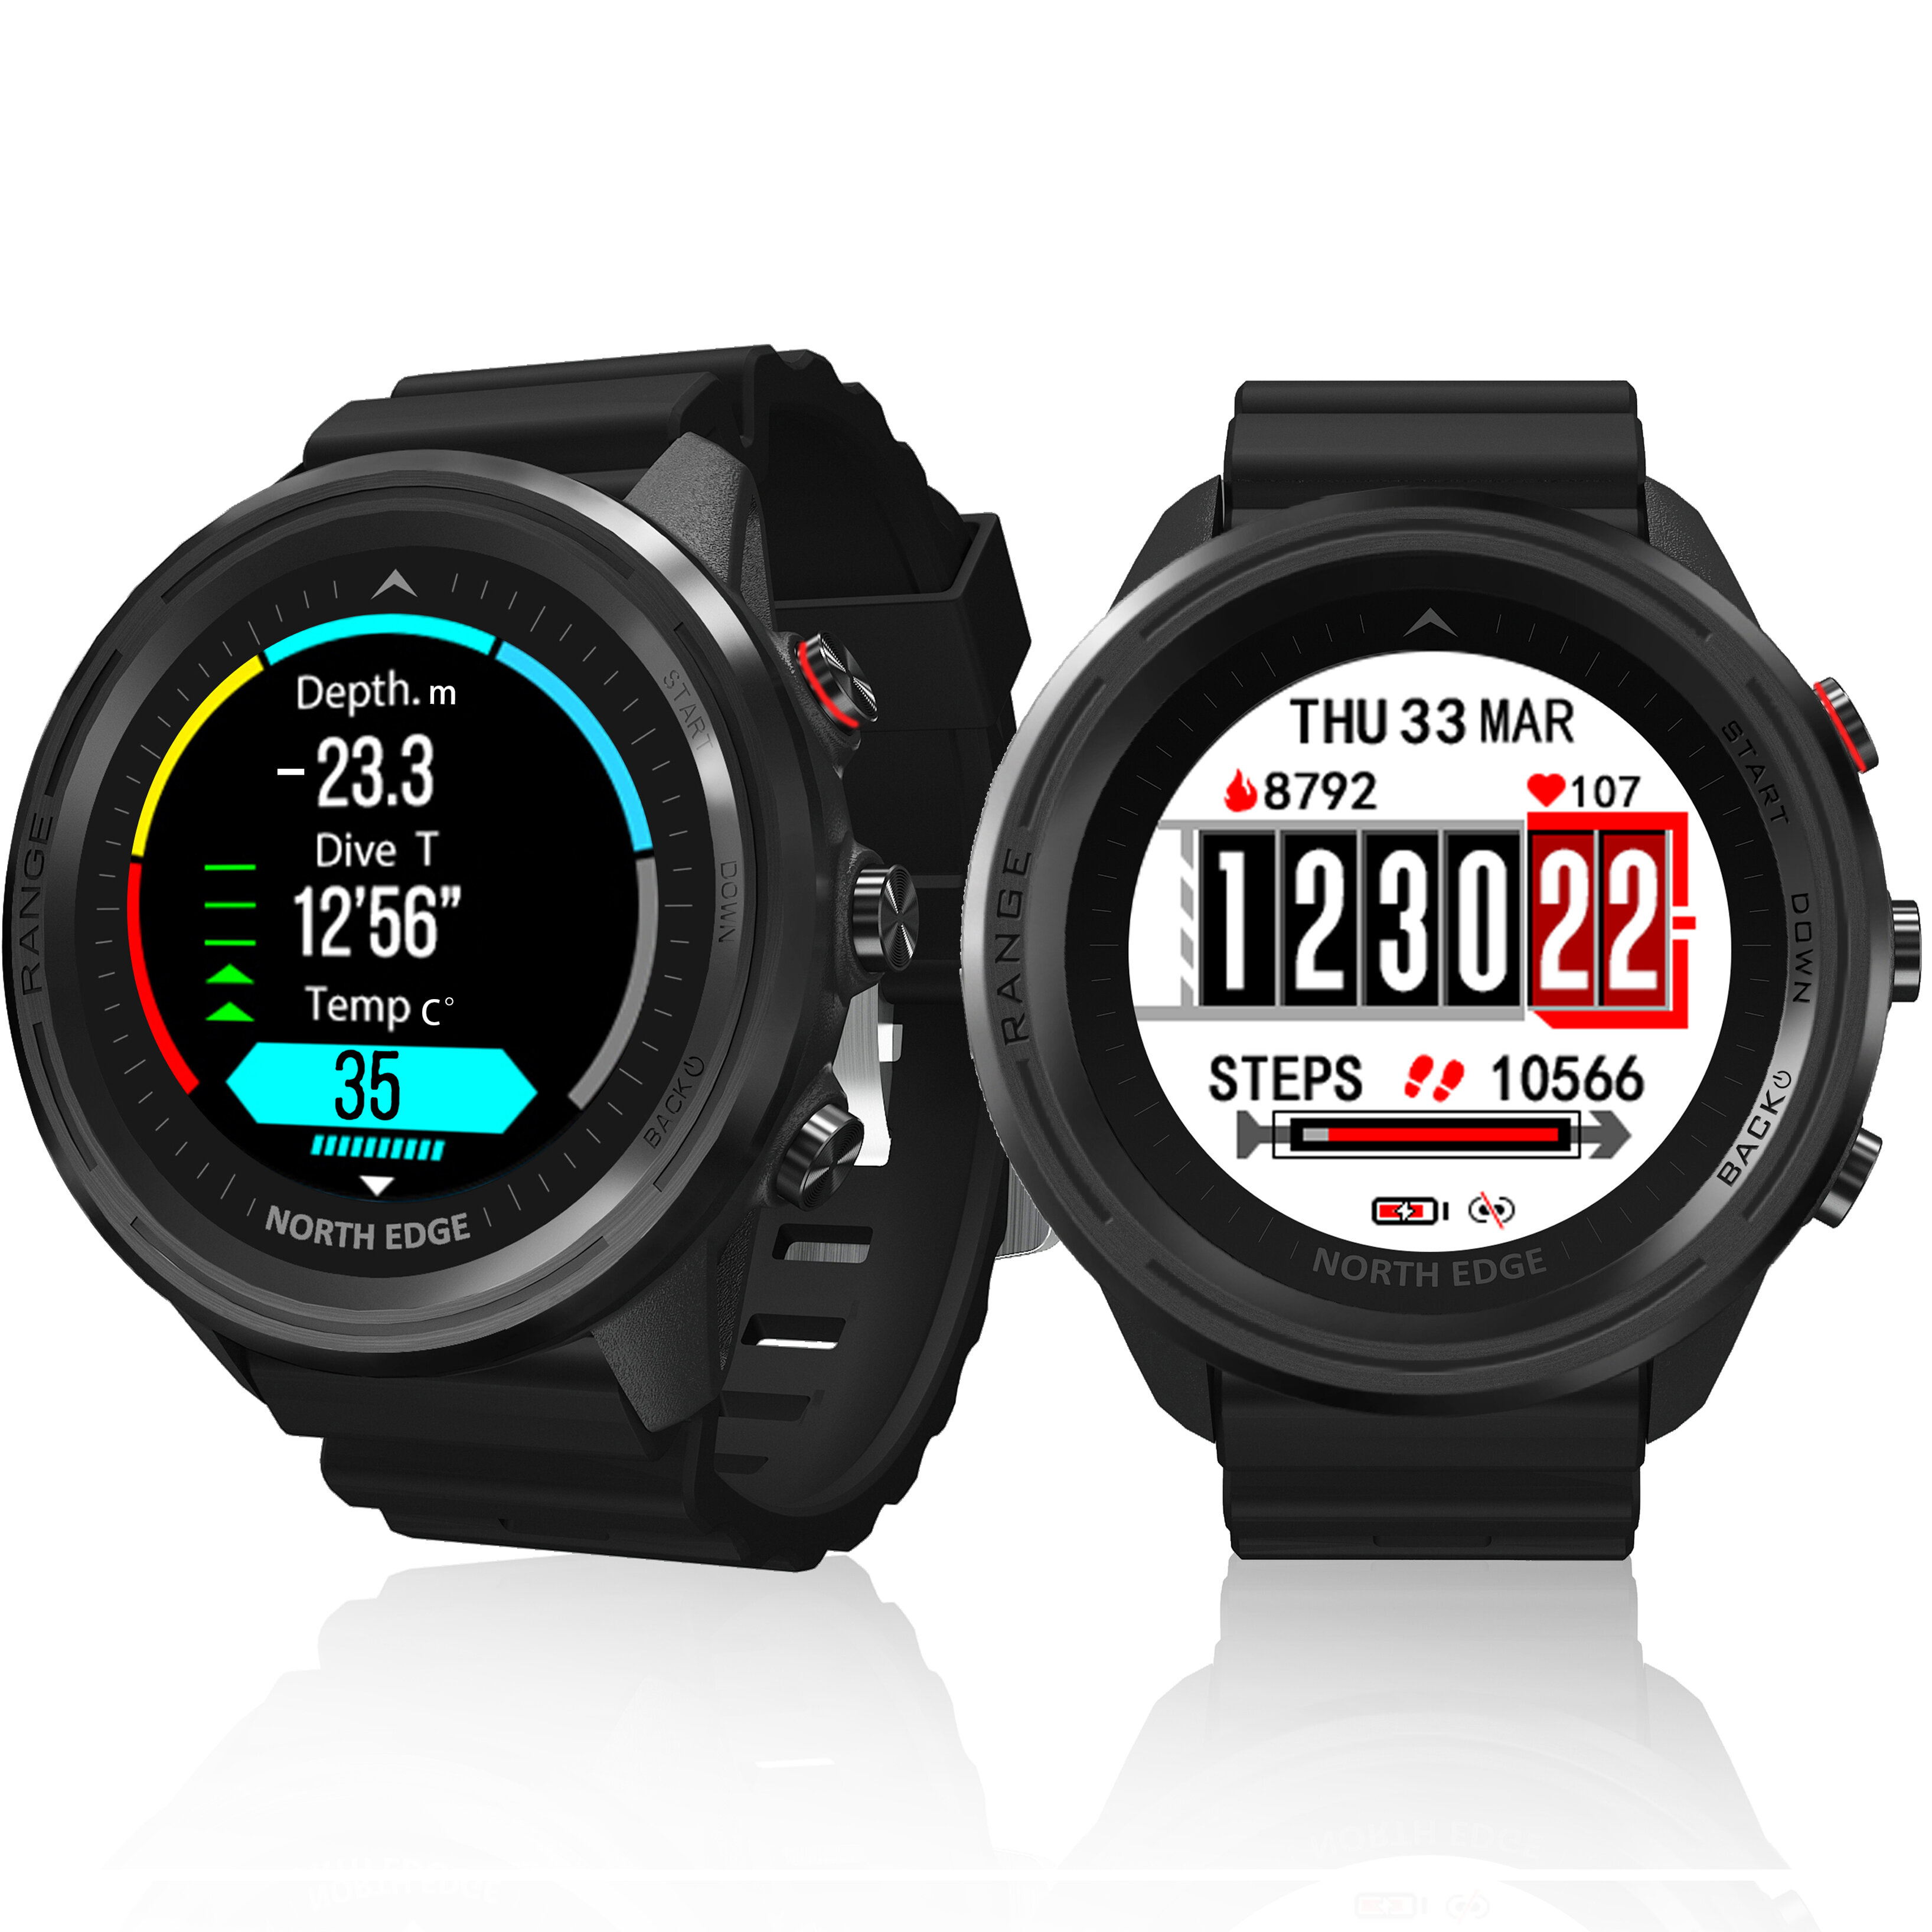 

[BT5.1] NORTH EDGE Range 5 GPS Glonass Beidou Compass Barometer Altimeter Multi-Sports Modes Heart Rate Monitor Diving W